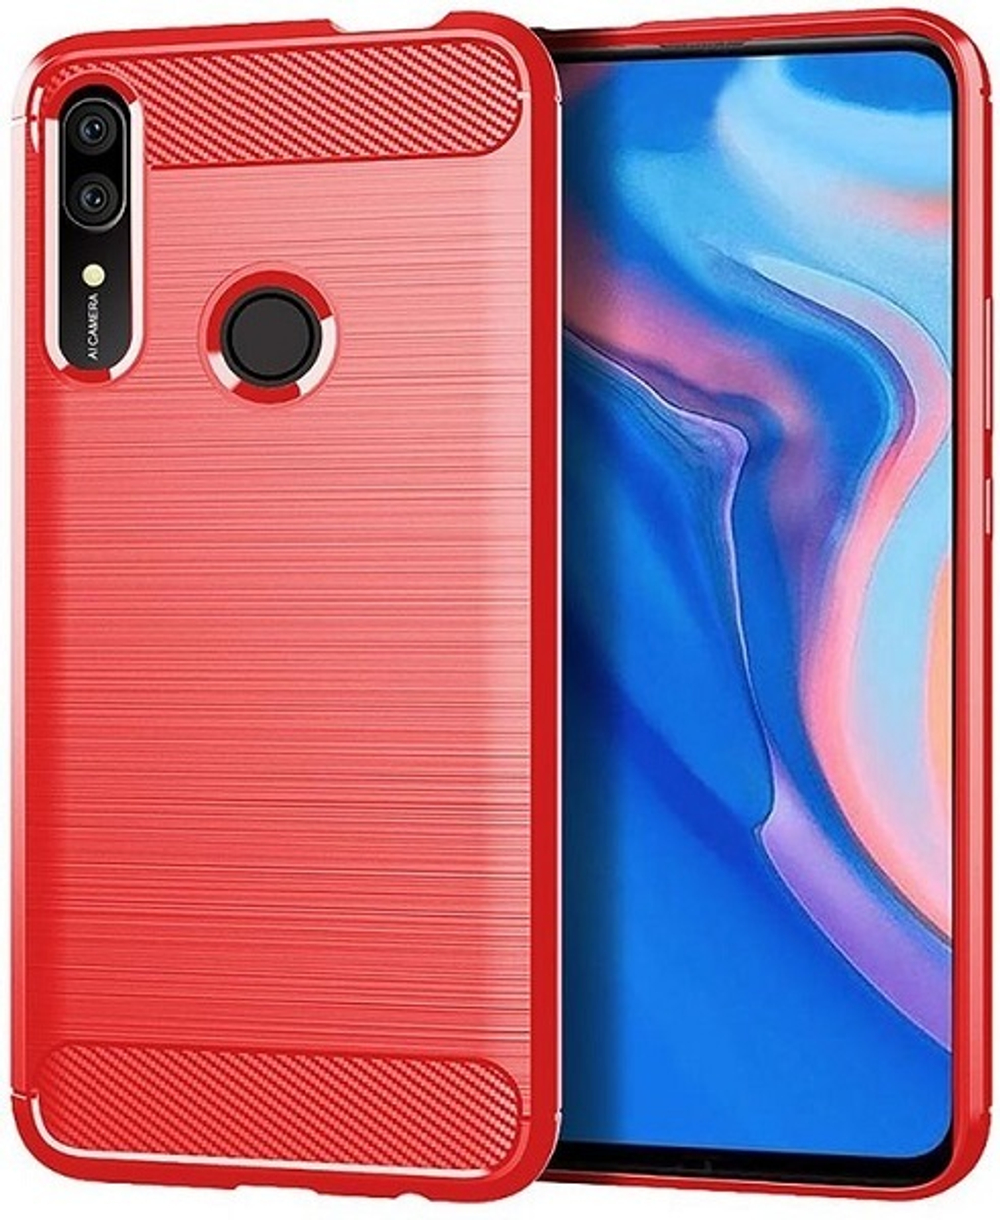 Чехол для Huawei P Smart Z (Y9 Prime 2019, Enjoy10 Plus, Honor 9X Premium) цвет Red (красный), серия Carbon от Caseport